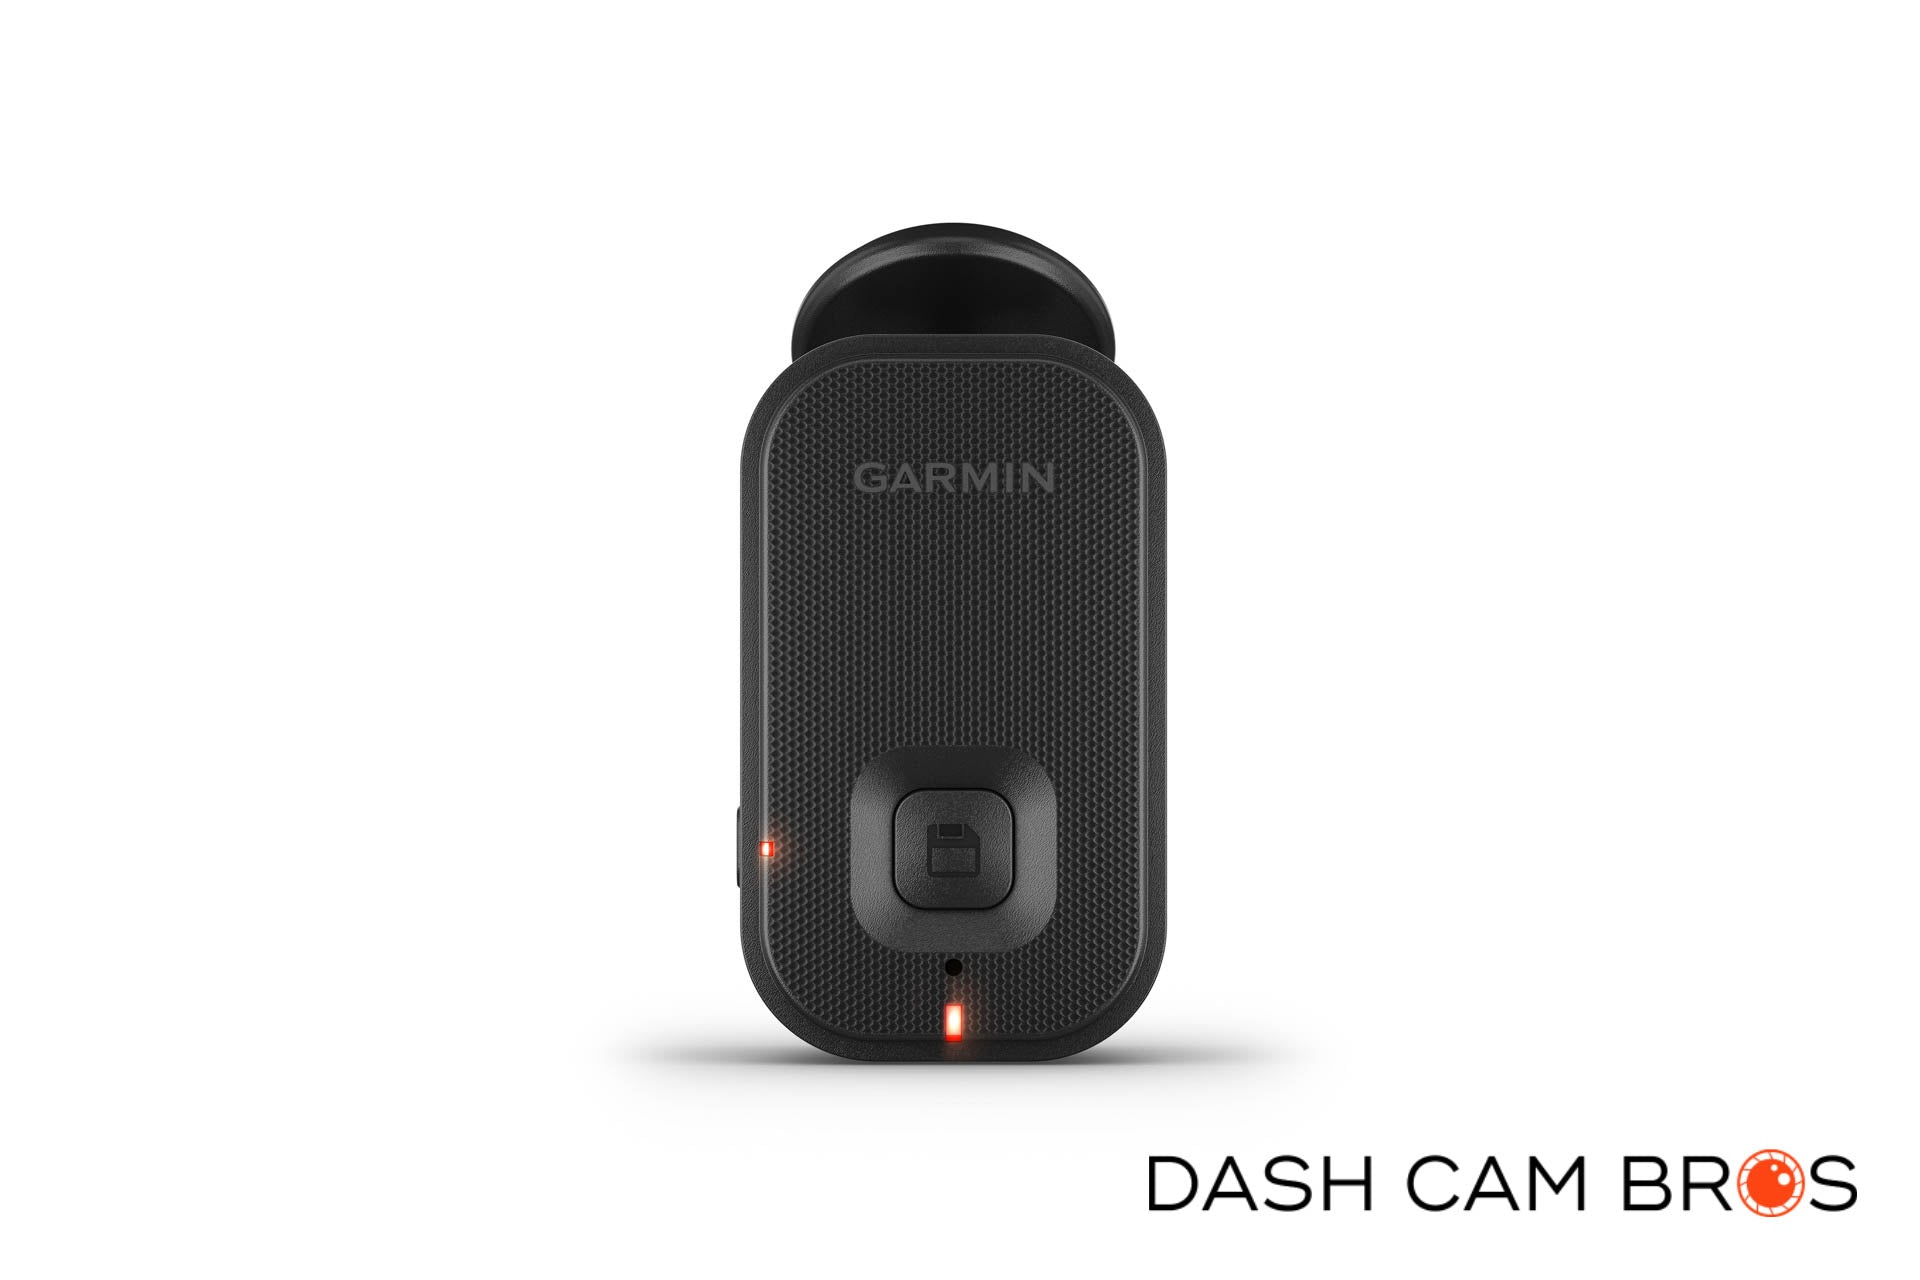  Dash Cam Front and Rear, Mini Dash Cam 1080P Full HD